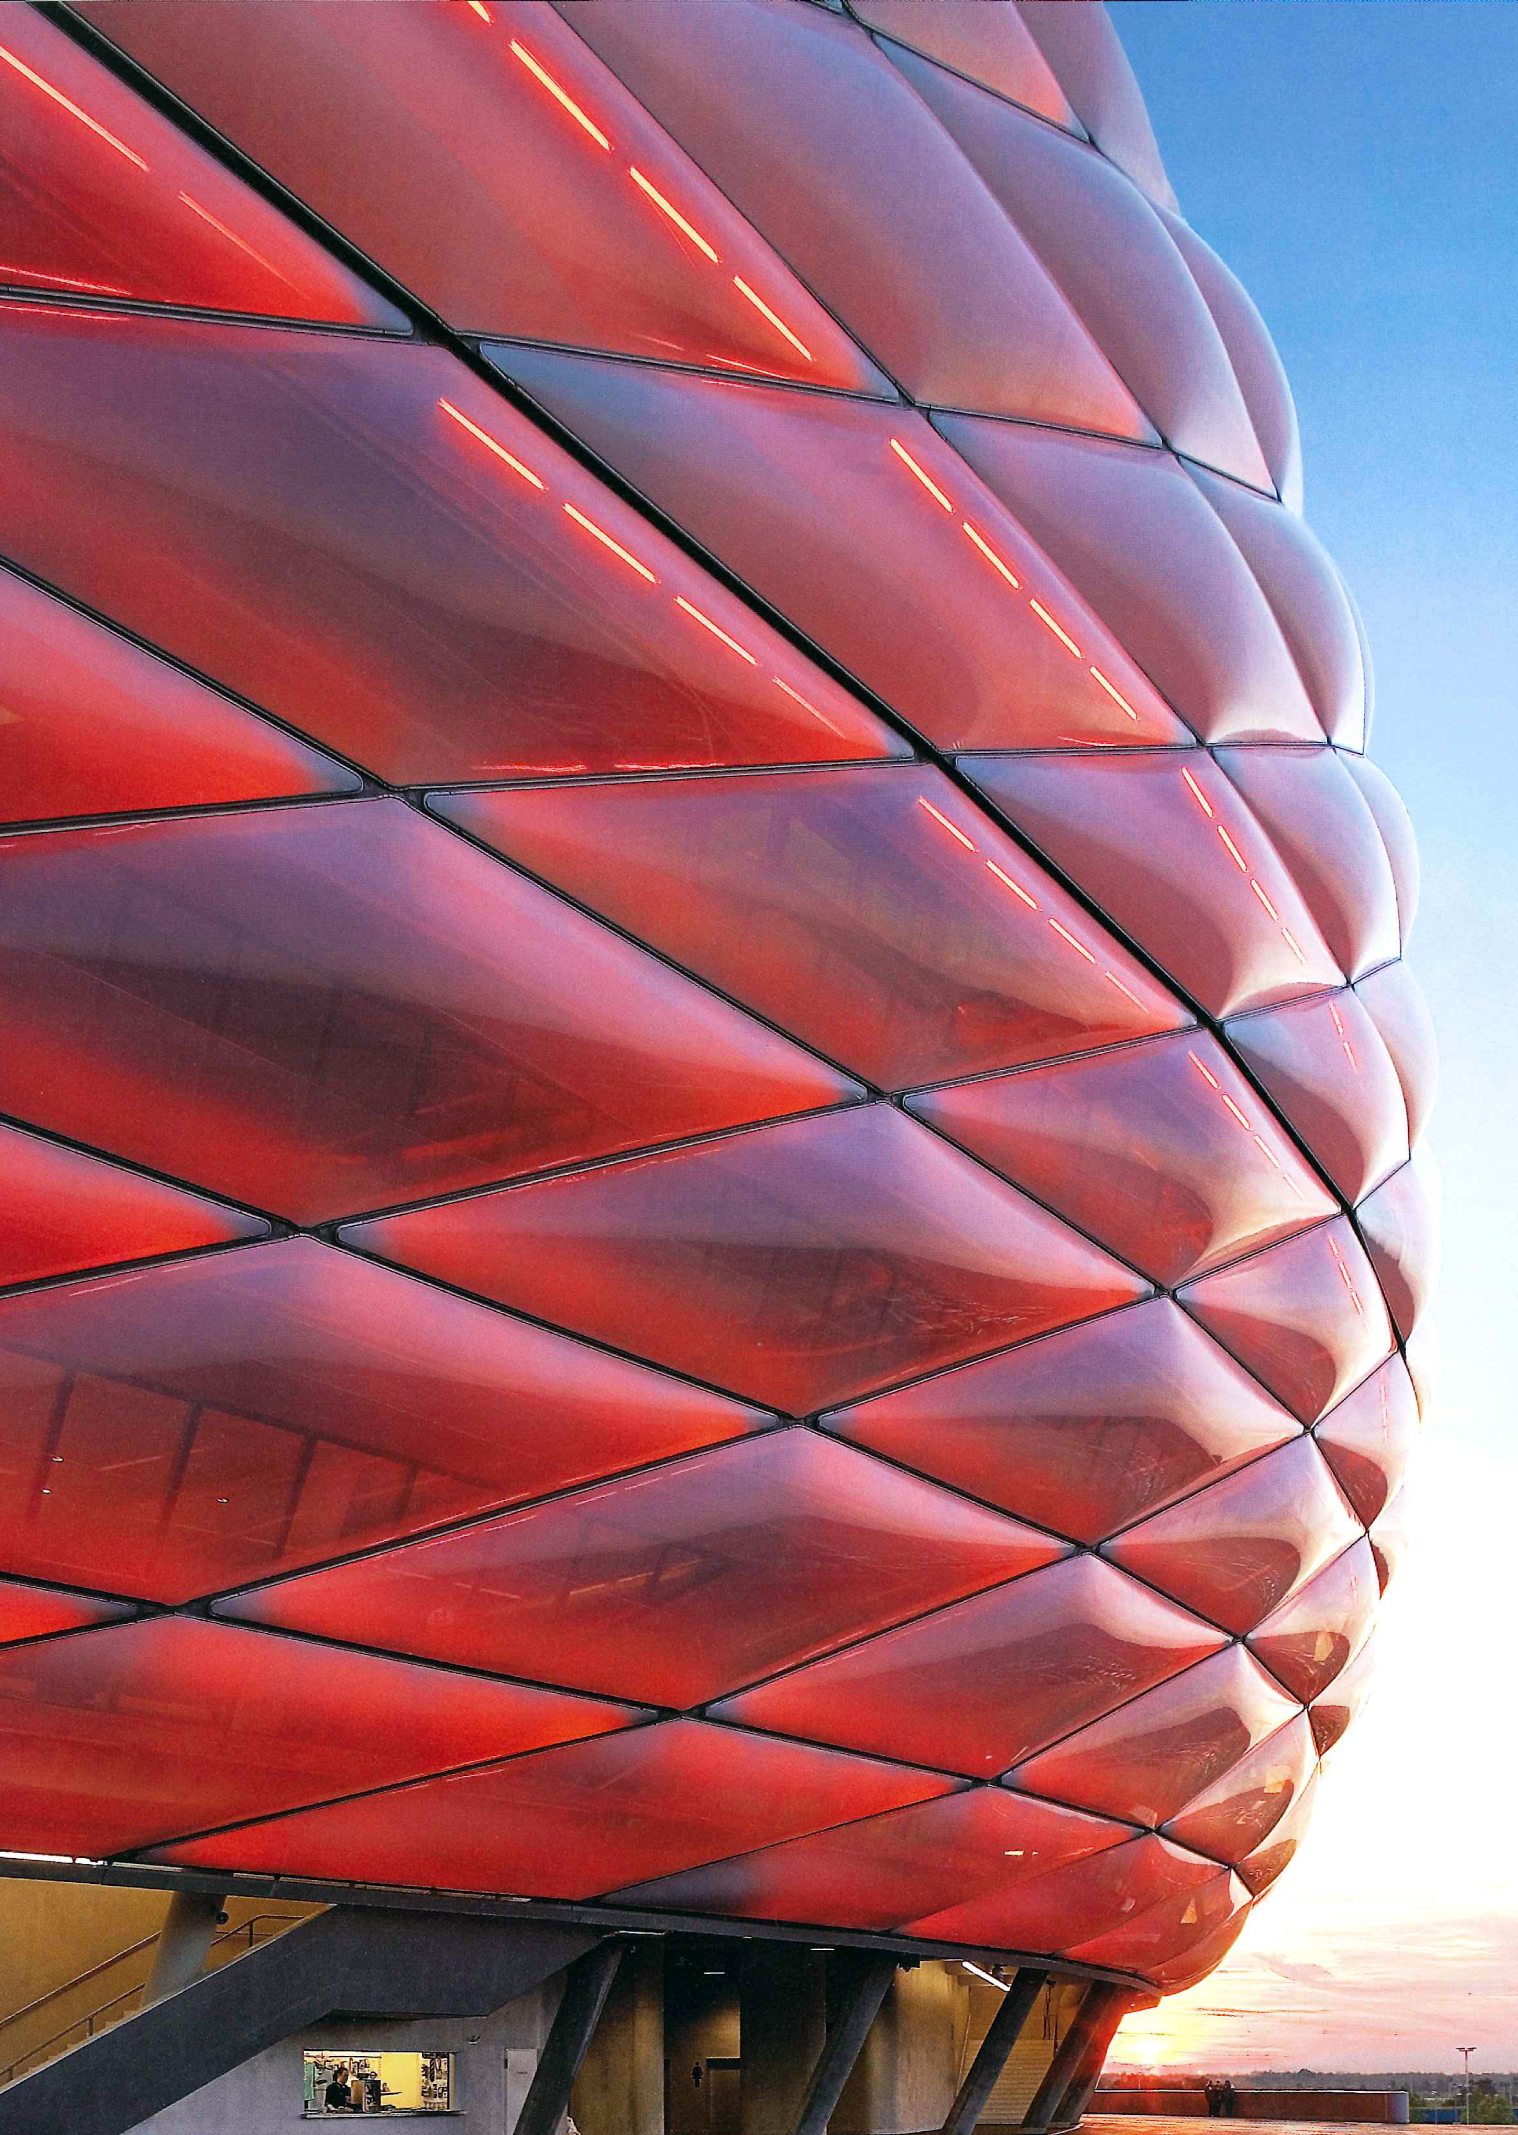 Allianz Arena in Munich | Buildingskins's Blog